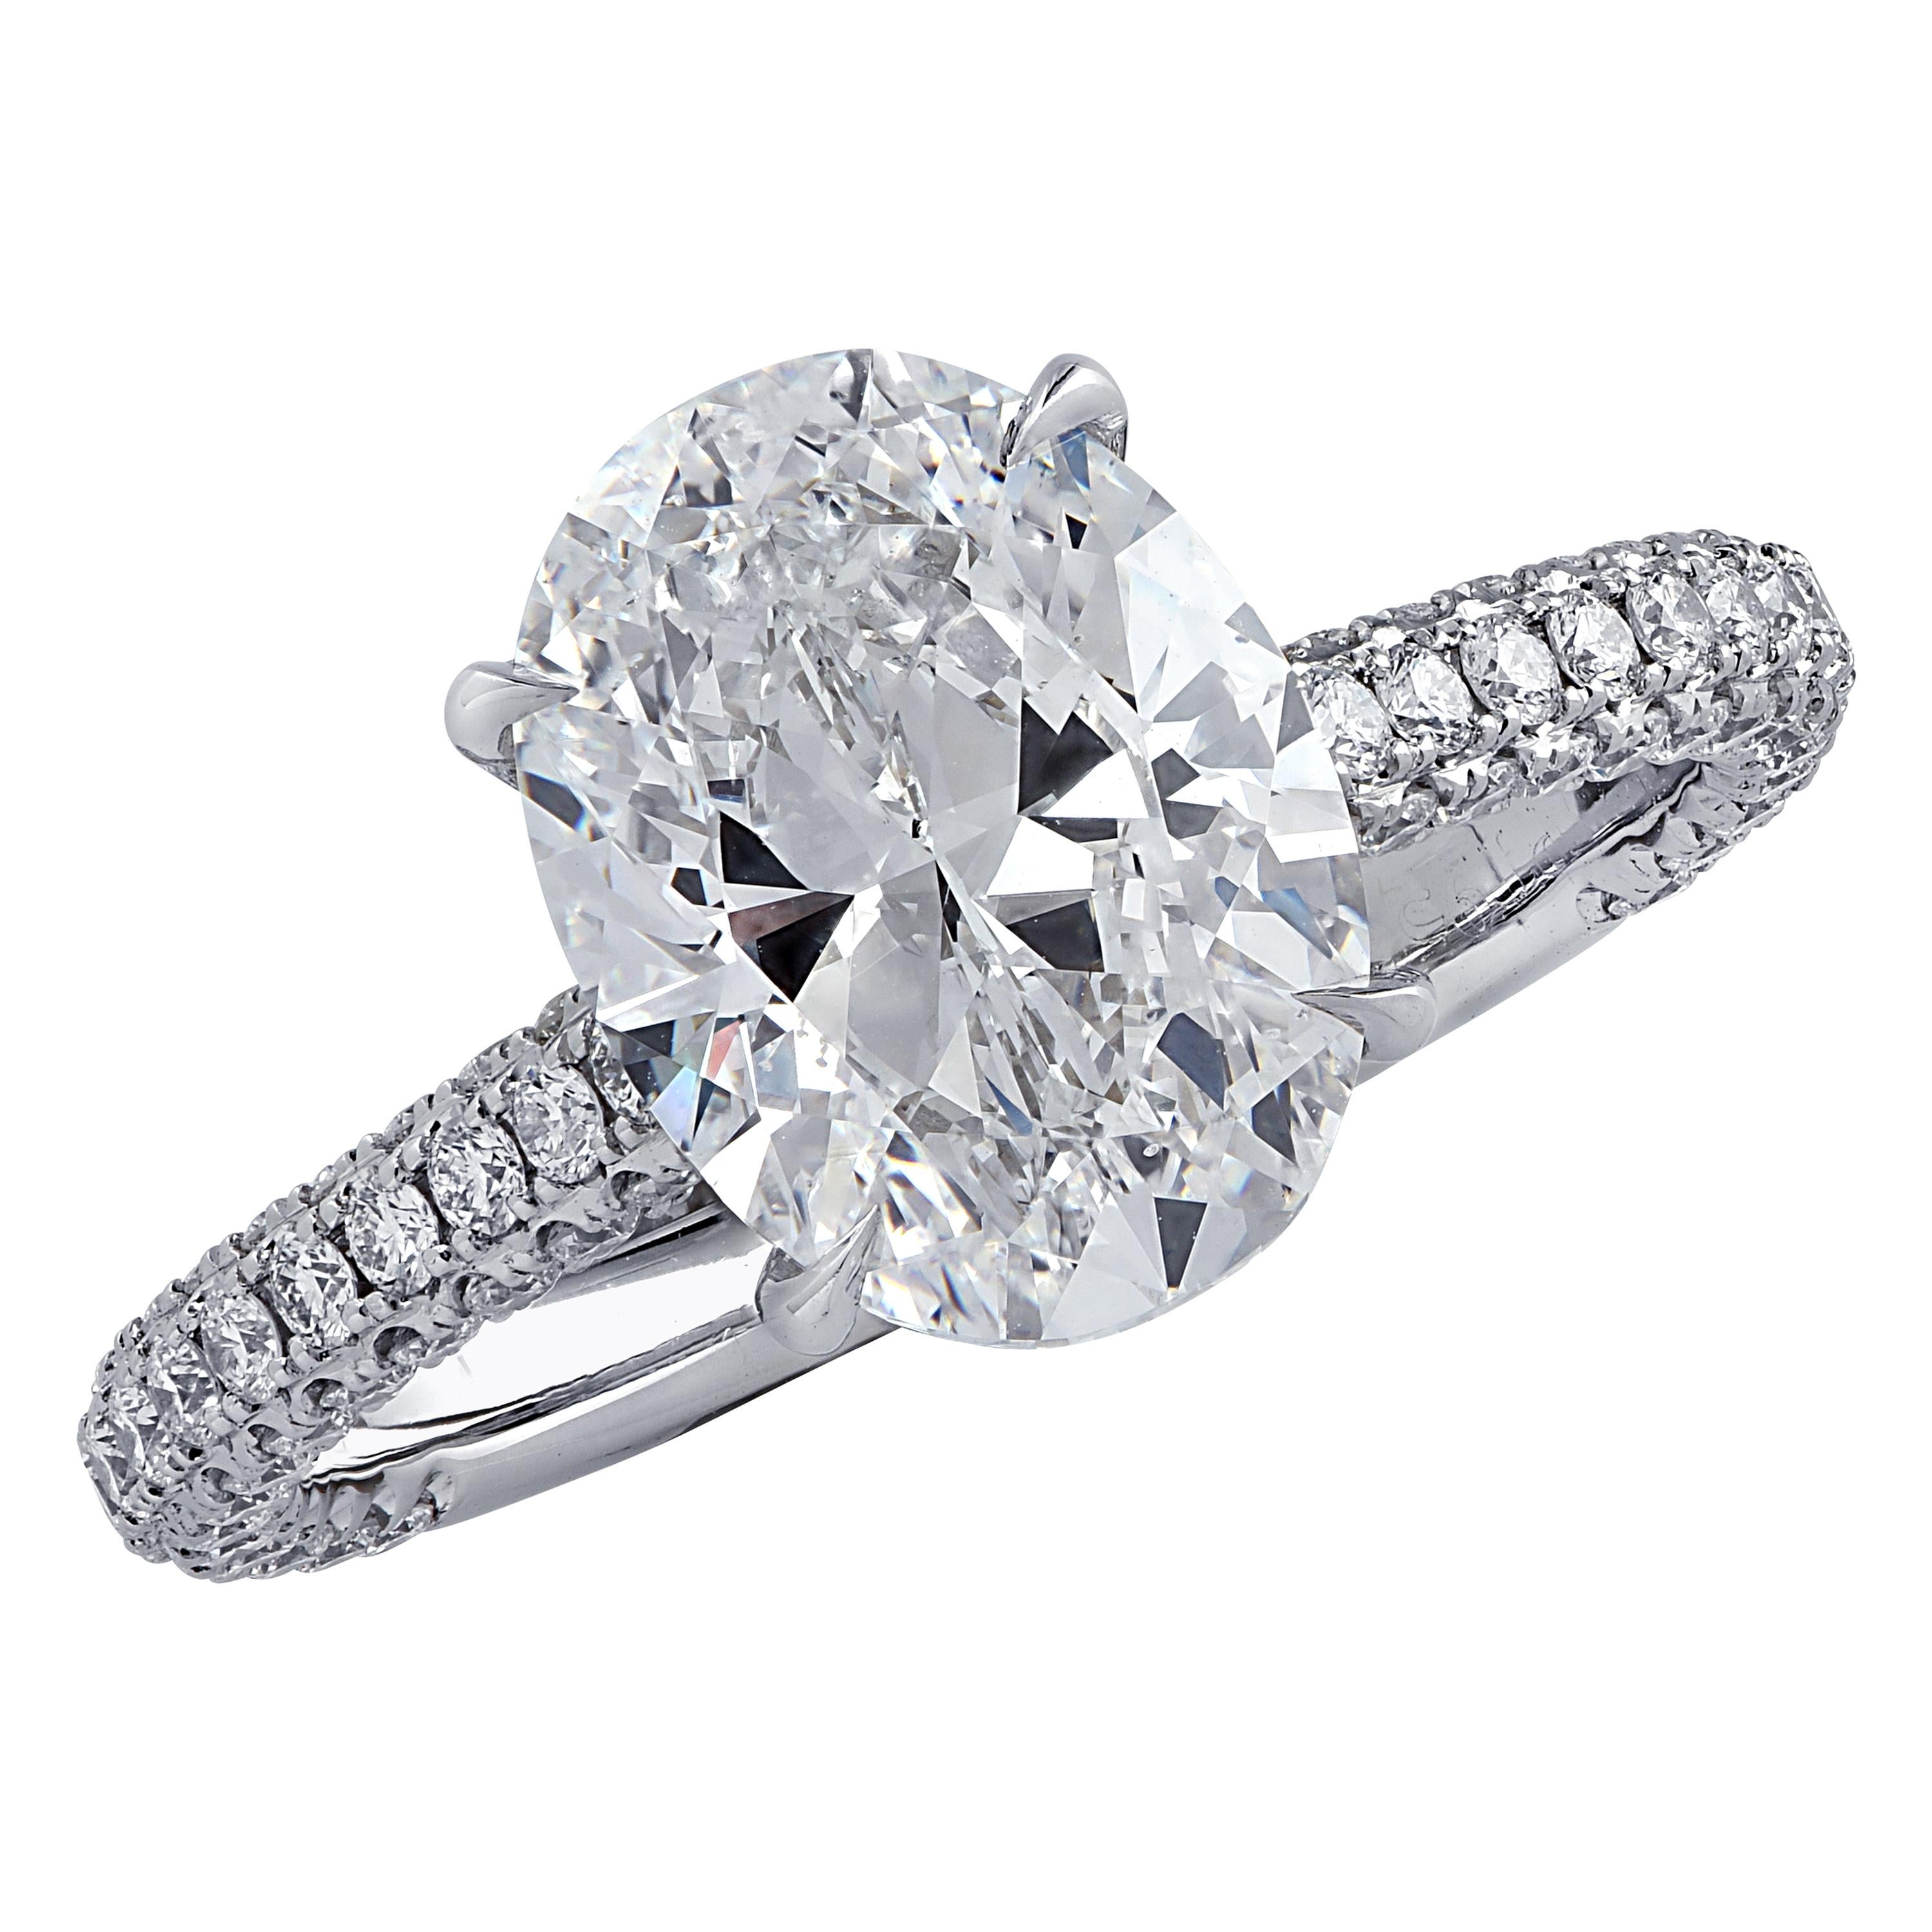 Vivid Diamonds GIA Certified 3.02 Carat Diamond Engagement Ring